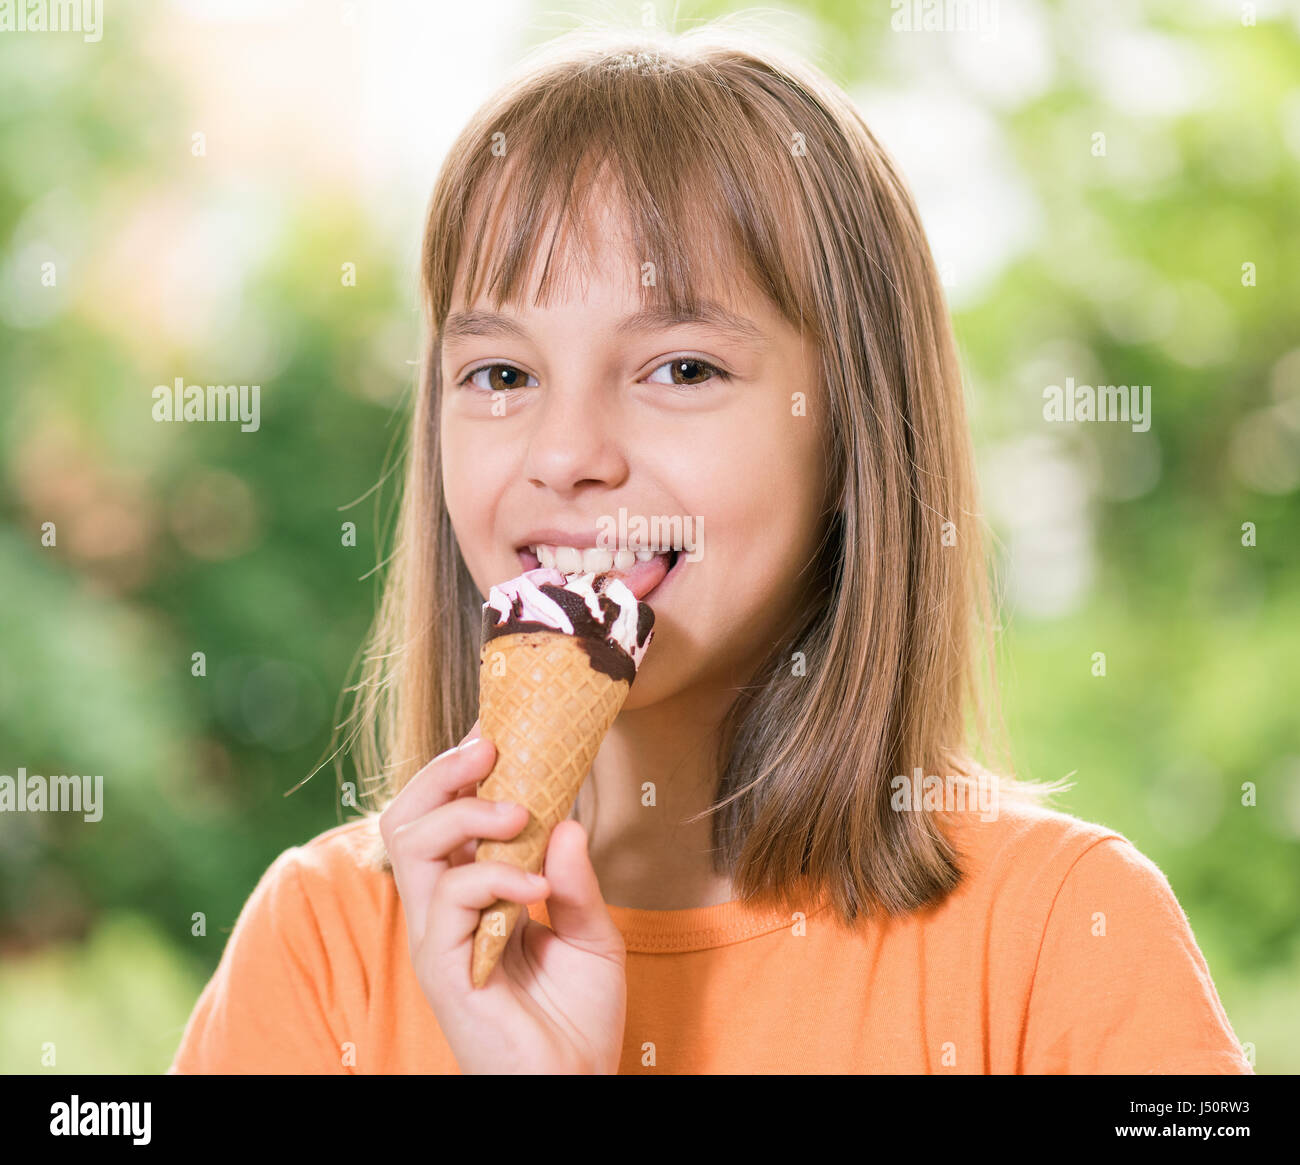 Little girl with ice cream Stock Photo